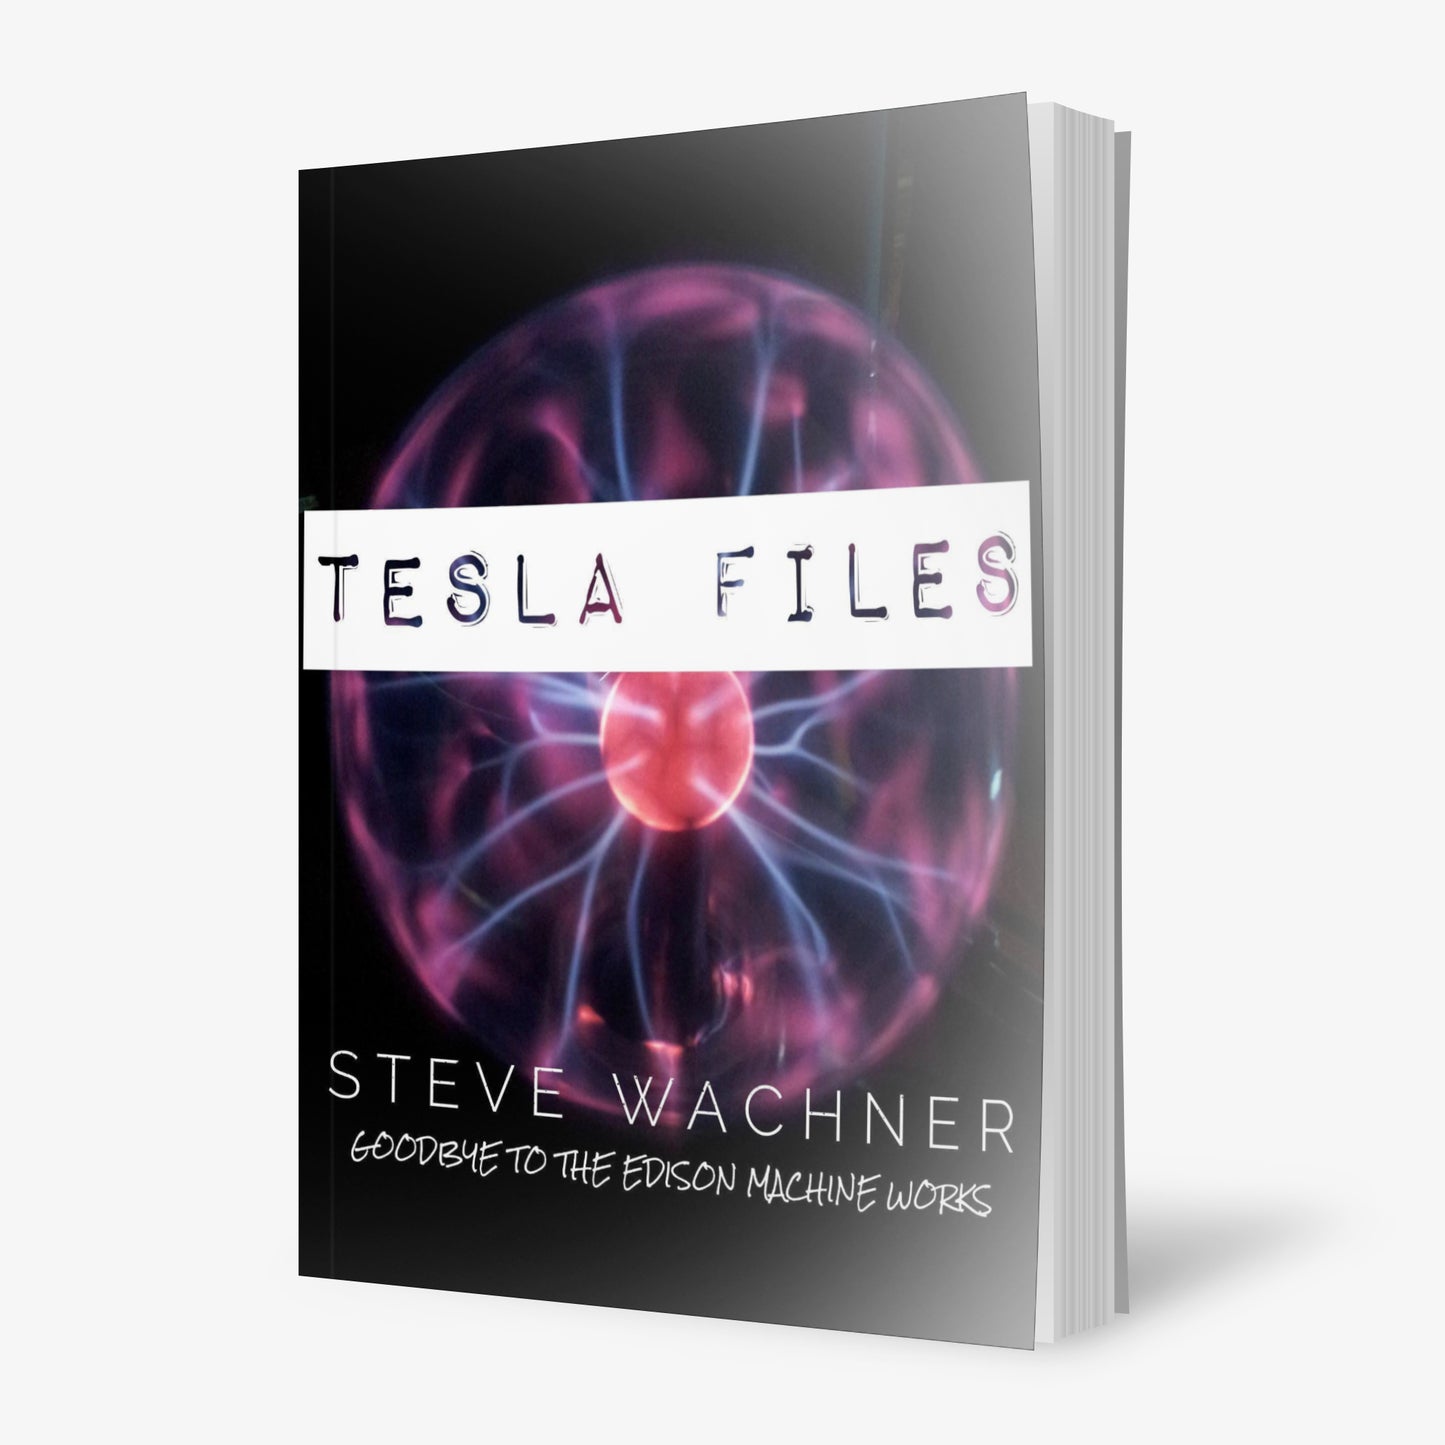 Tesla Files by Steve Wachner